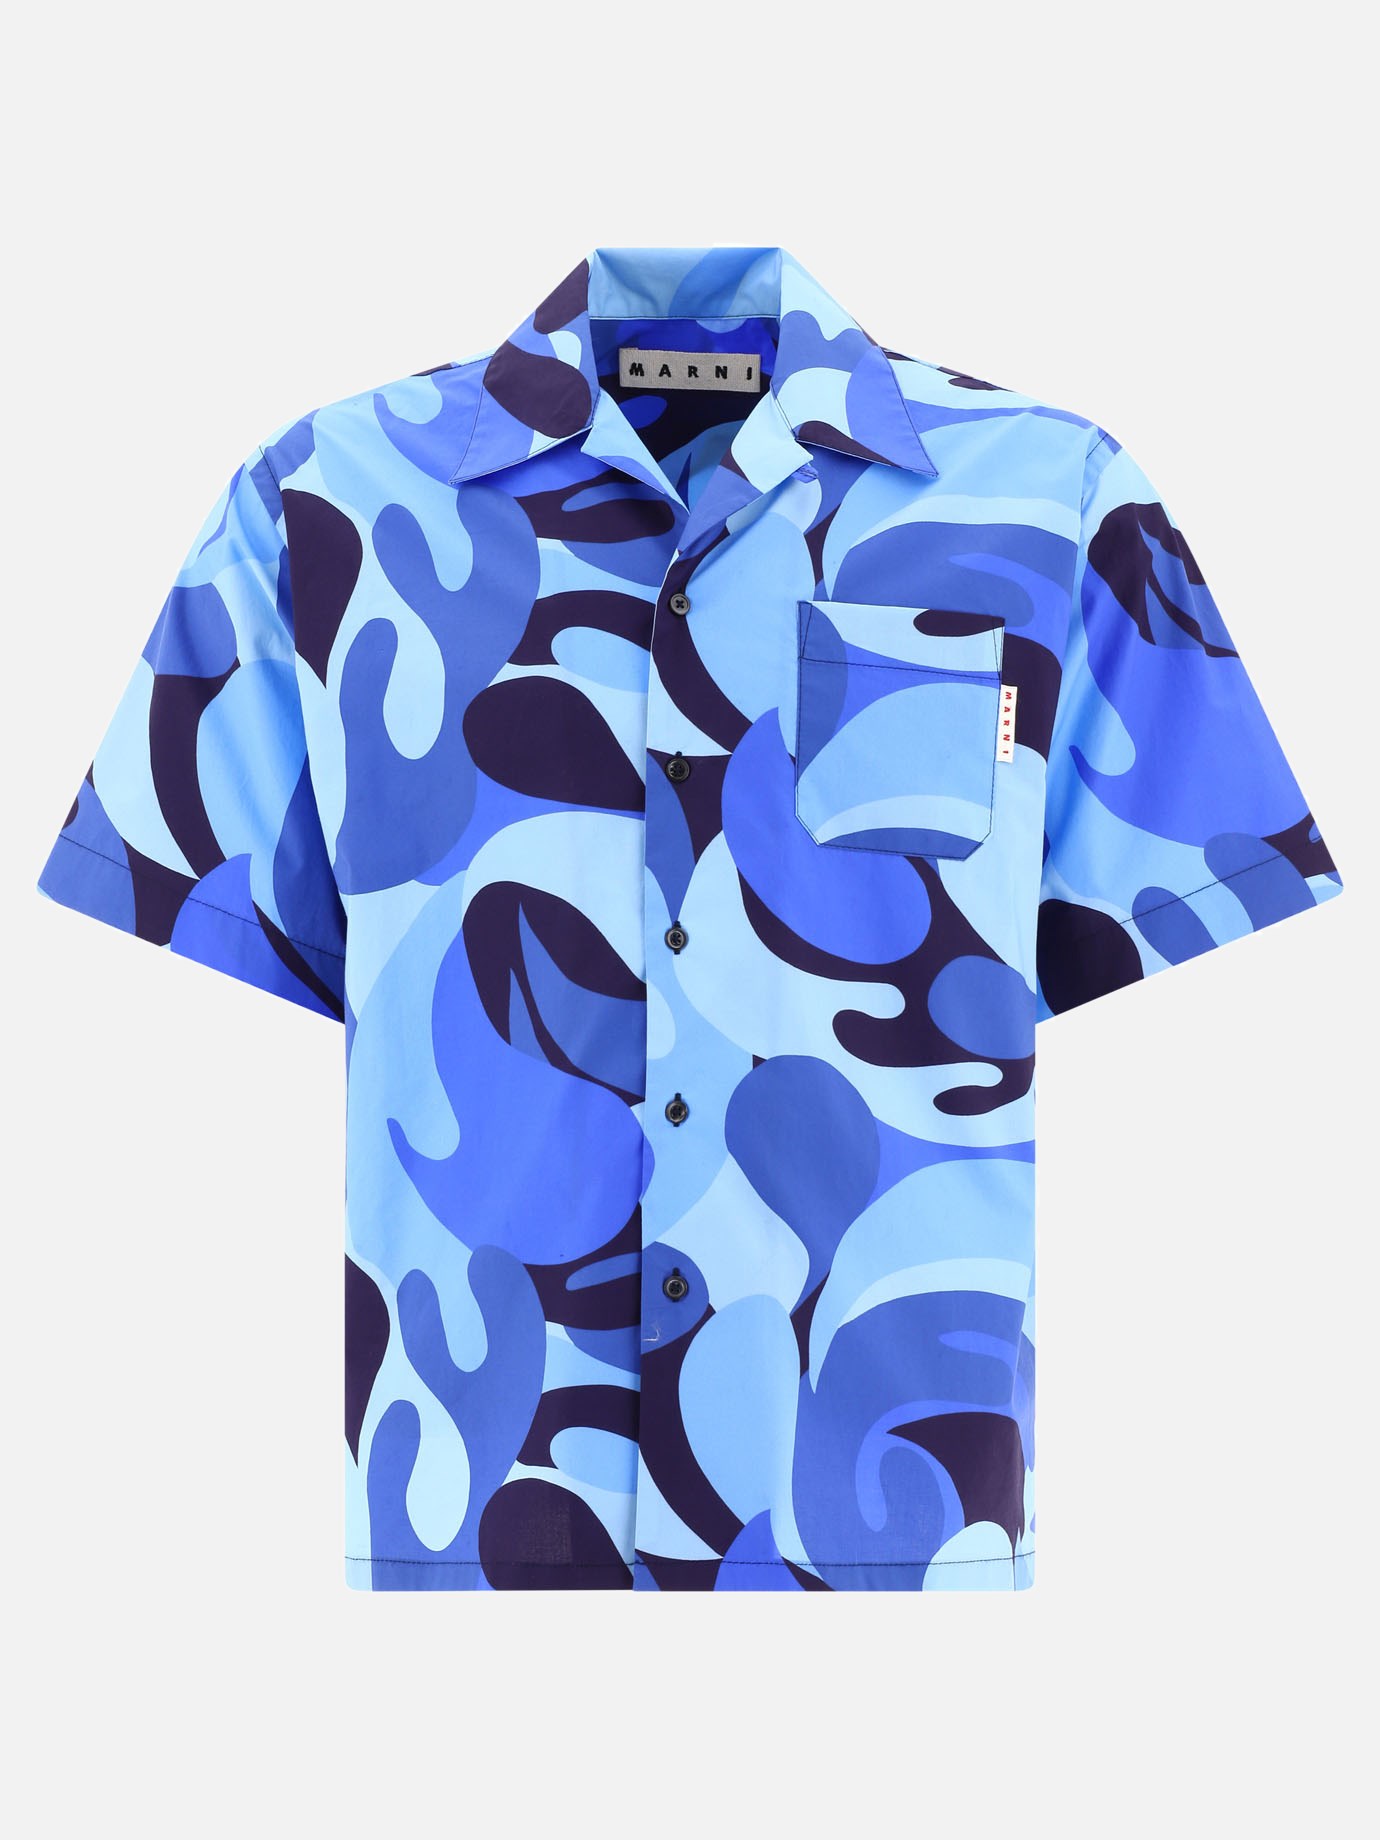 Camouflage shirt